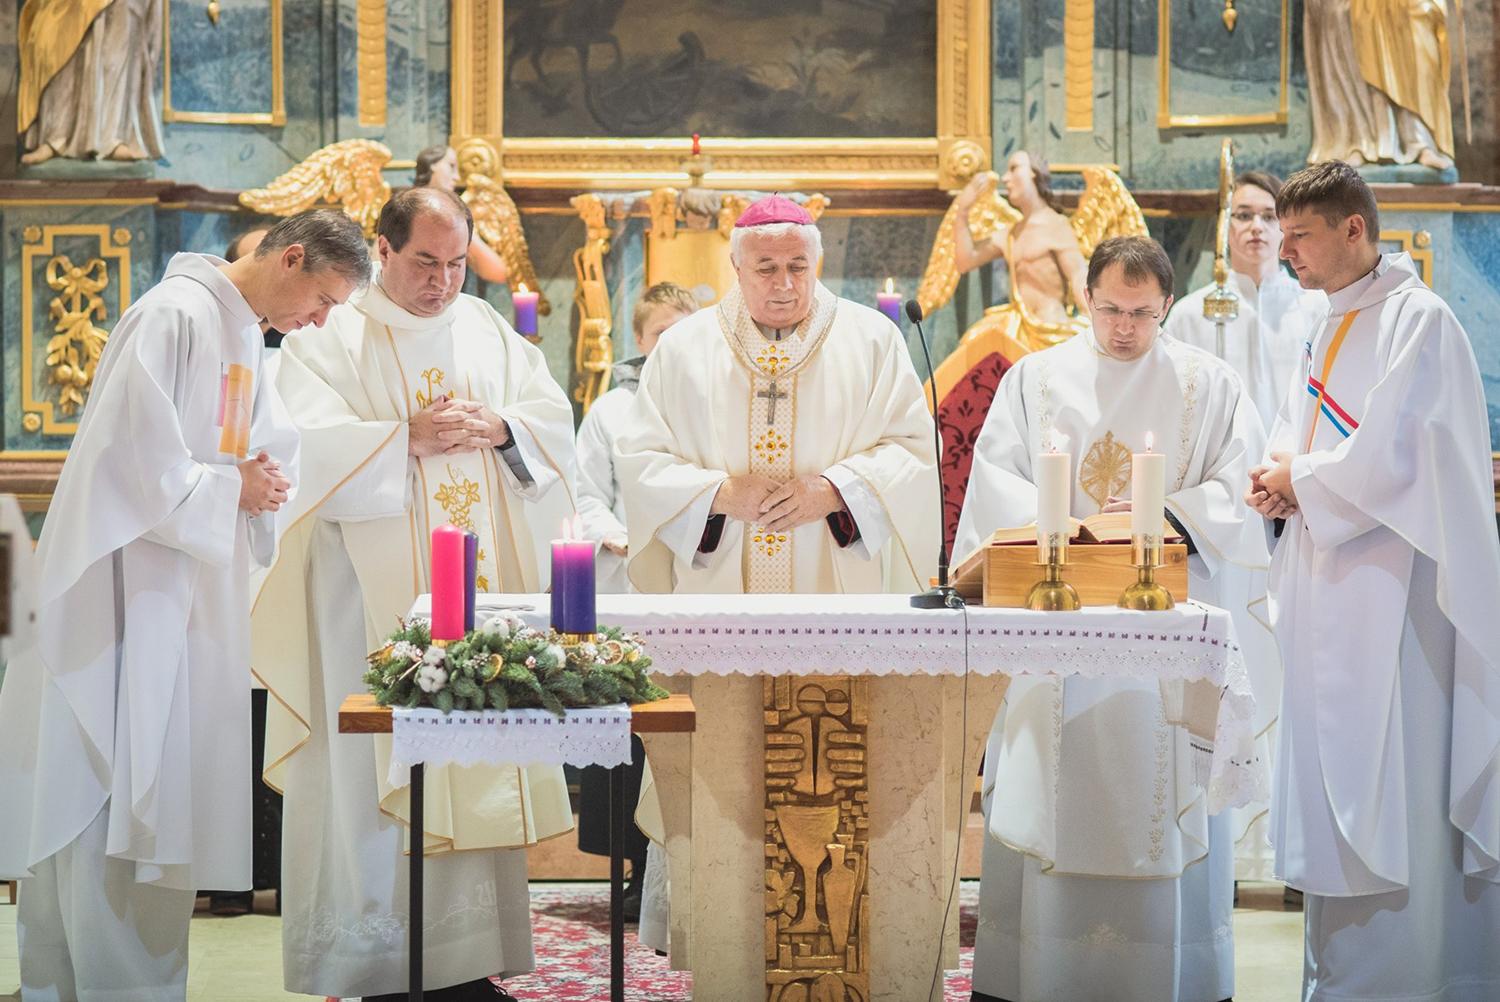 Biskupi požehnali 2 400 koledníkom Dobrej noviny